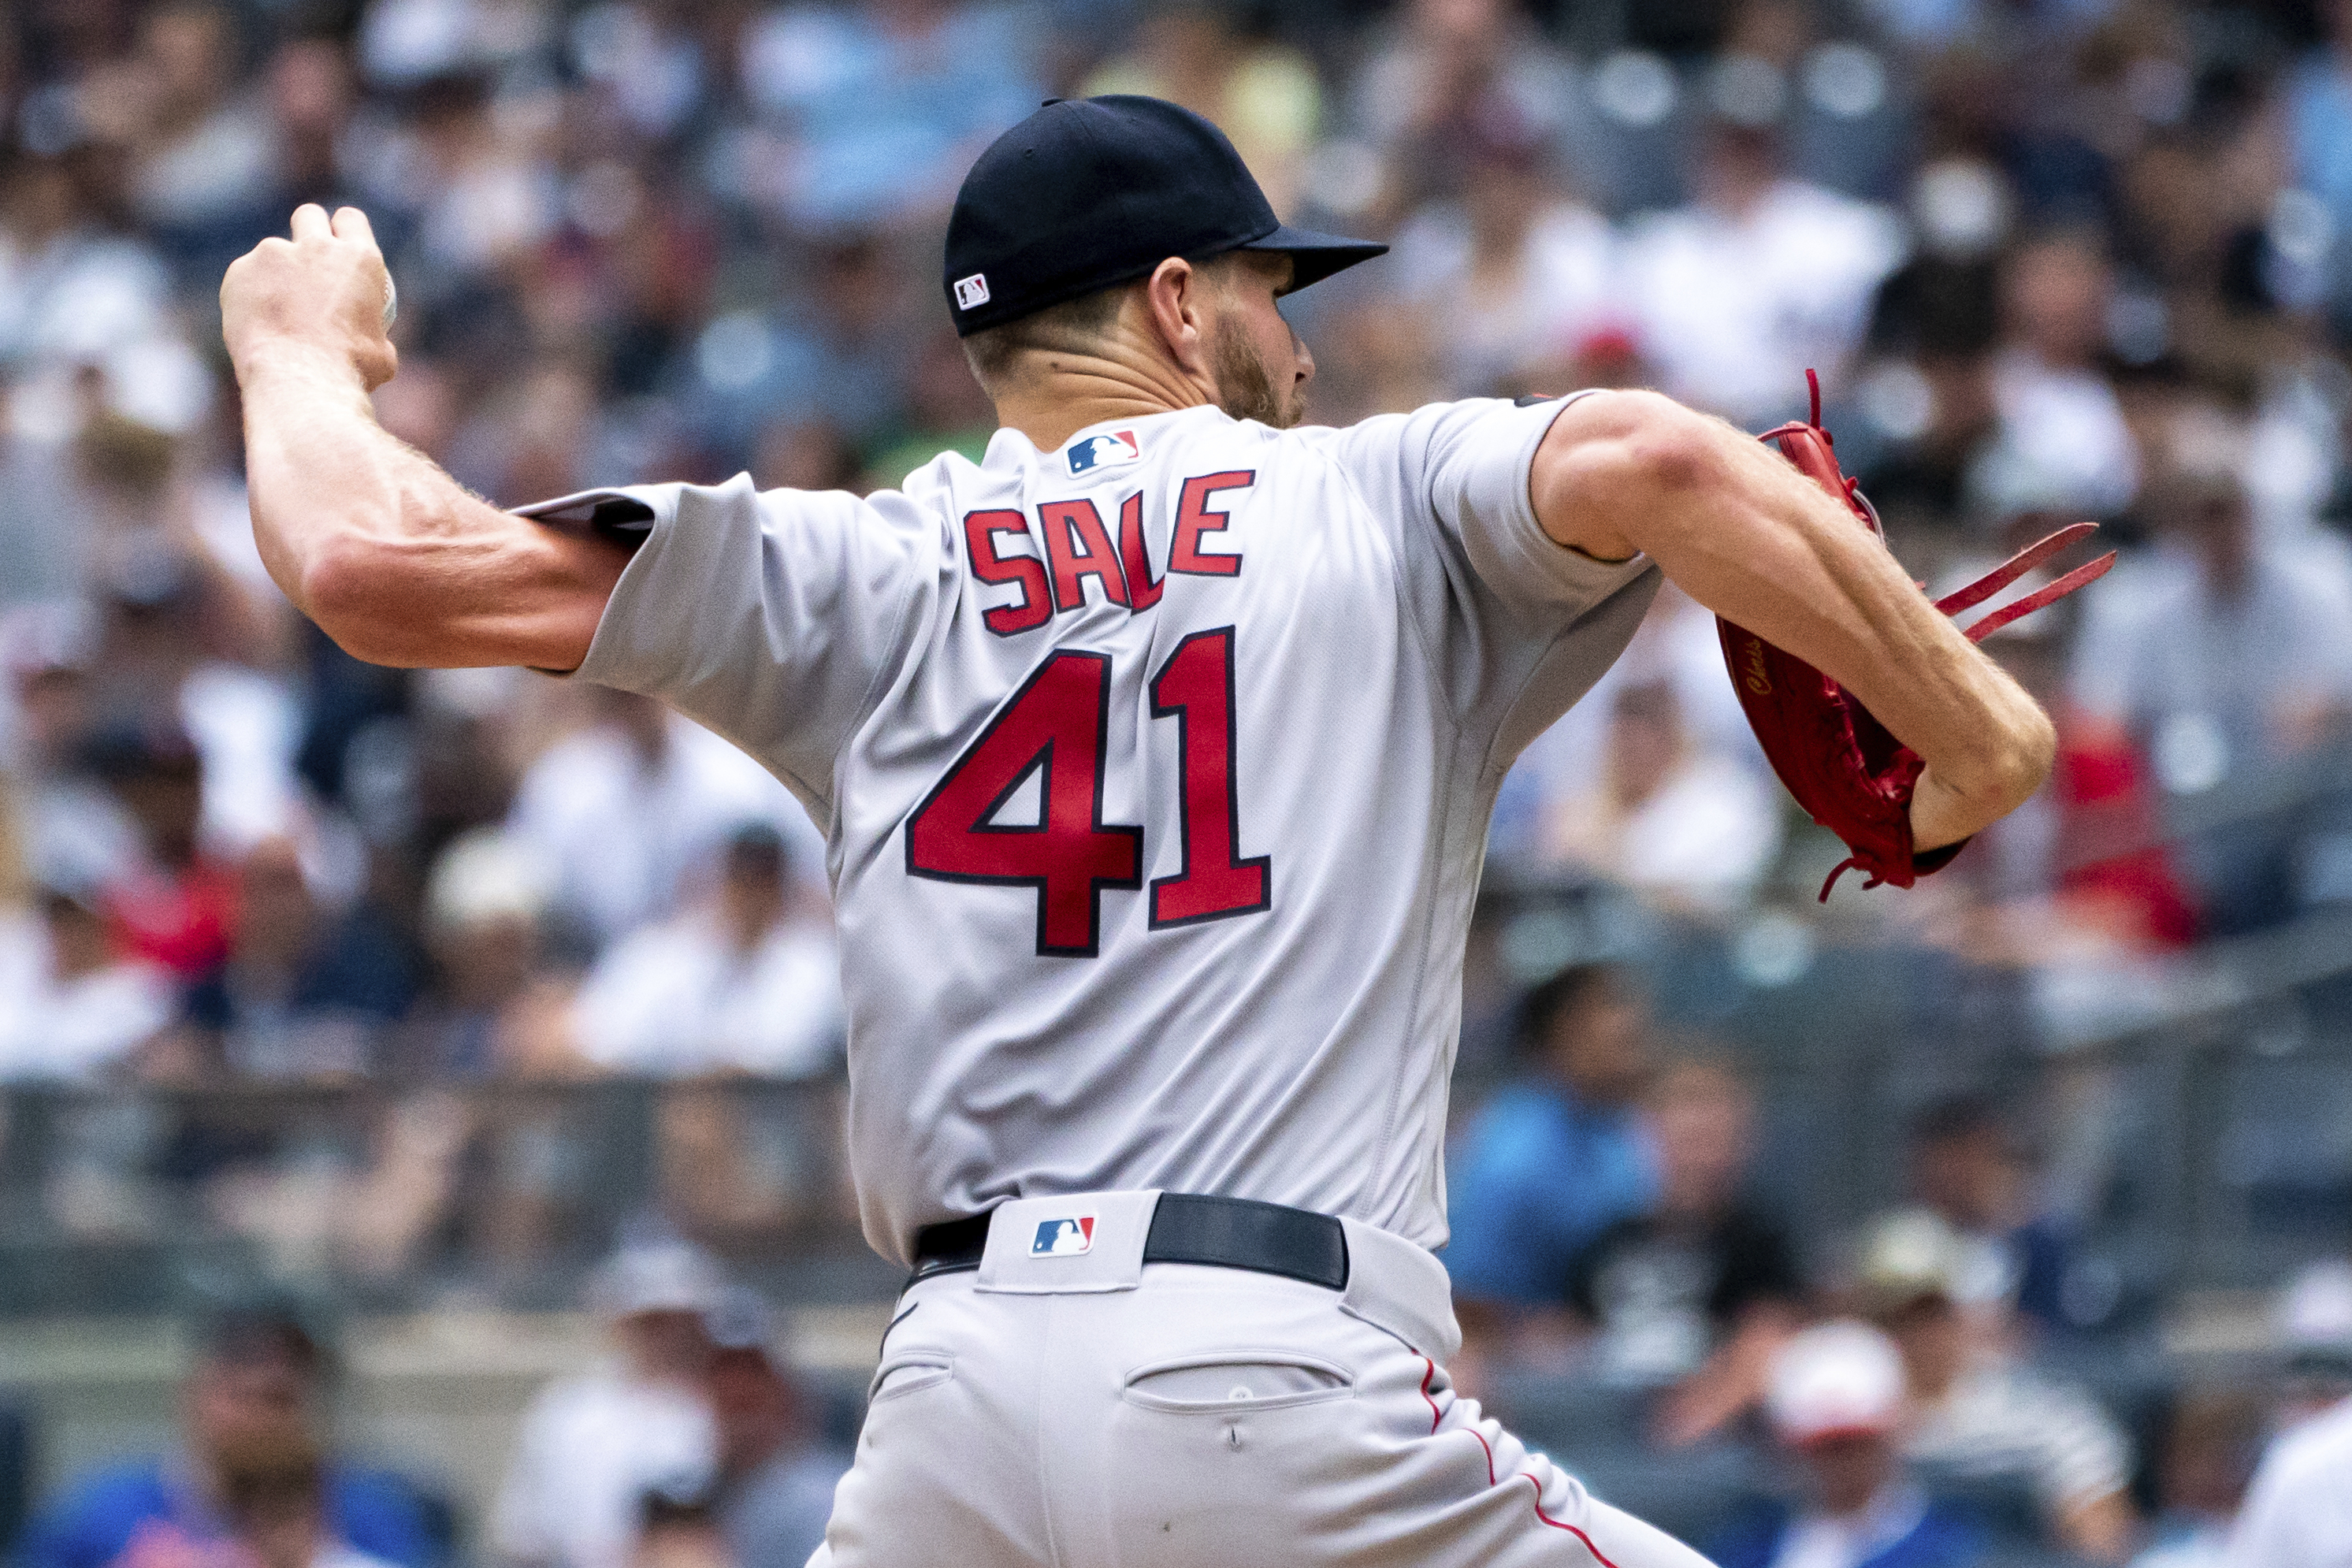 Boston Red Sox: What if Chris Sale returns to elite status